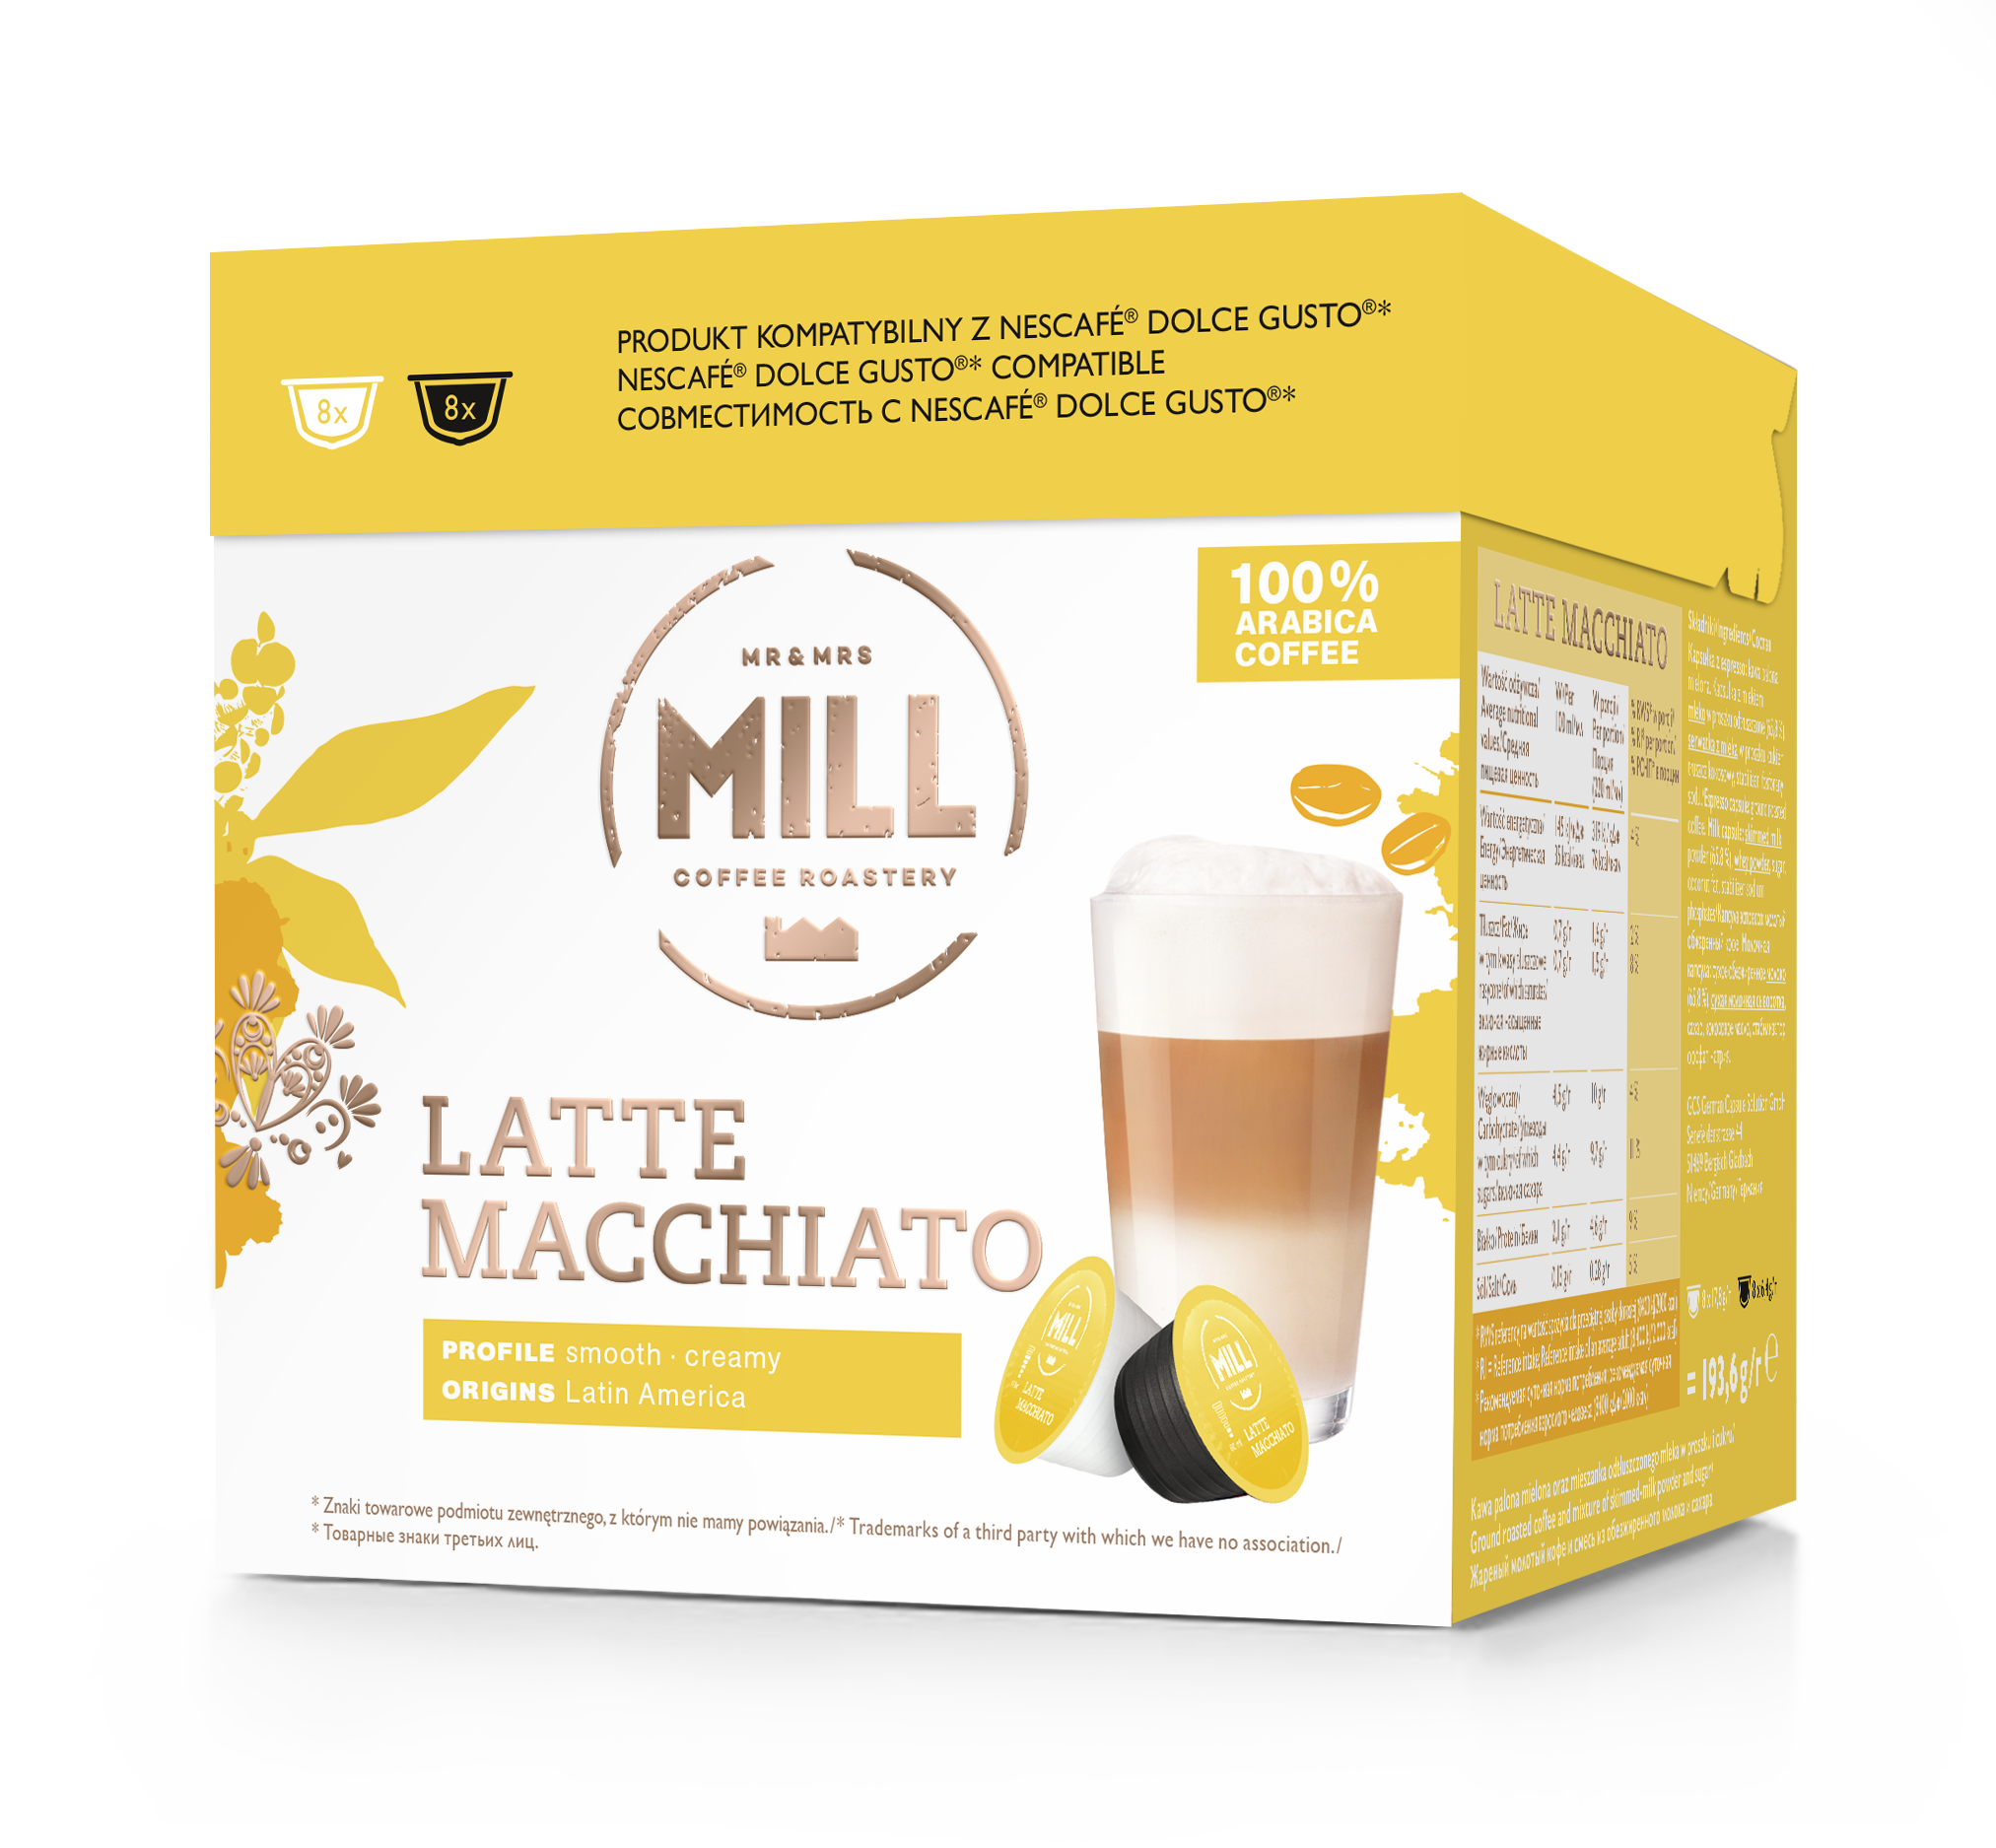 Mr&Mrs Mill Latte Macchiato kawa w kapsułkach, kompatybilna z Dolce Gusto